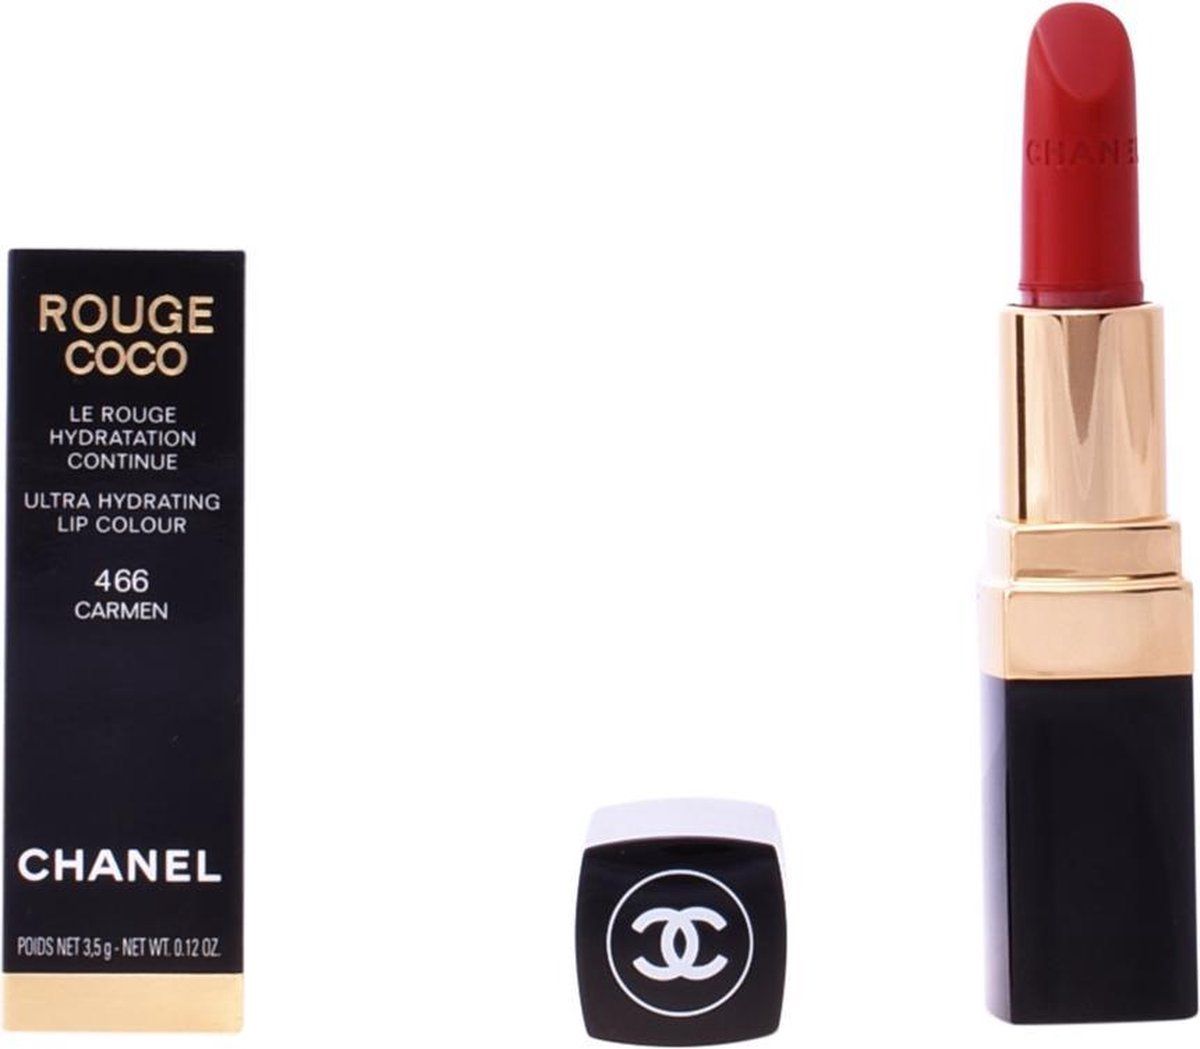 Chanel Langdurig Hydraterende Lippenstift Chanel - Rouge Coco Langdurig Hydraterende Lippenstift 466 CARMEN